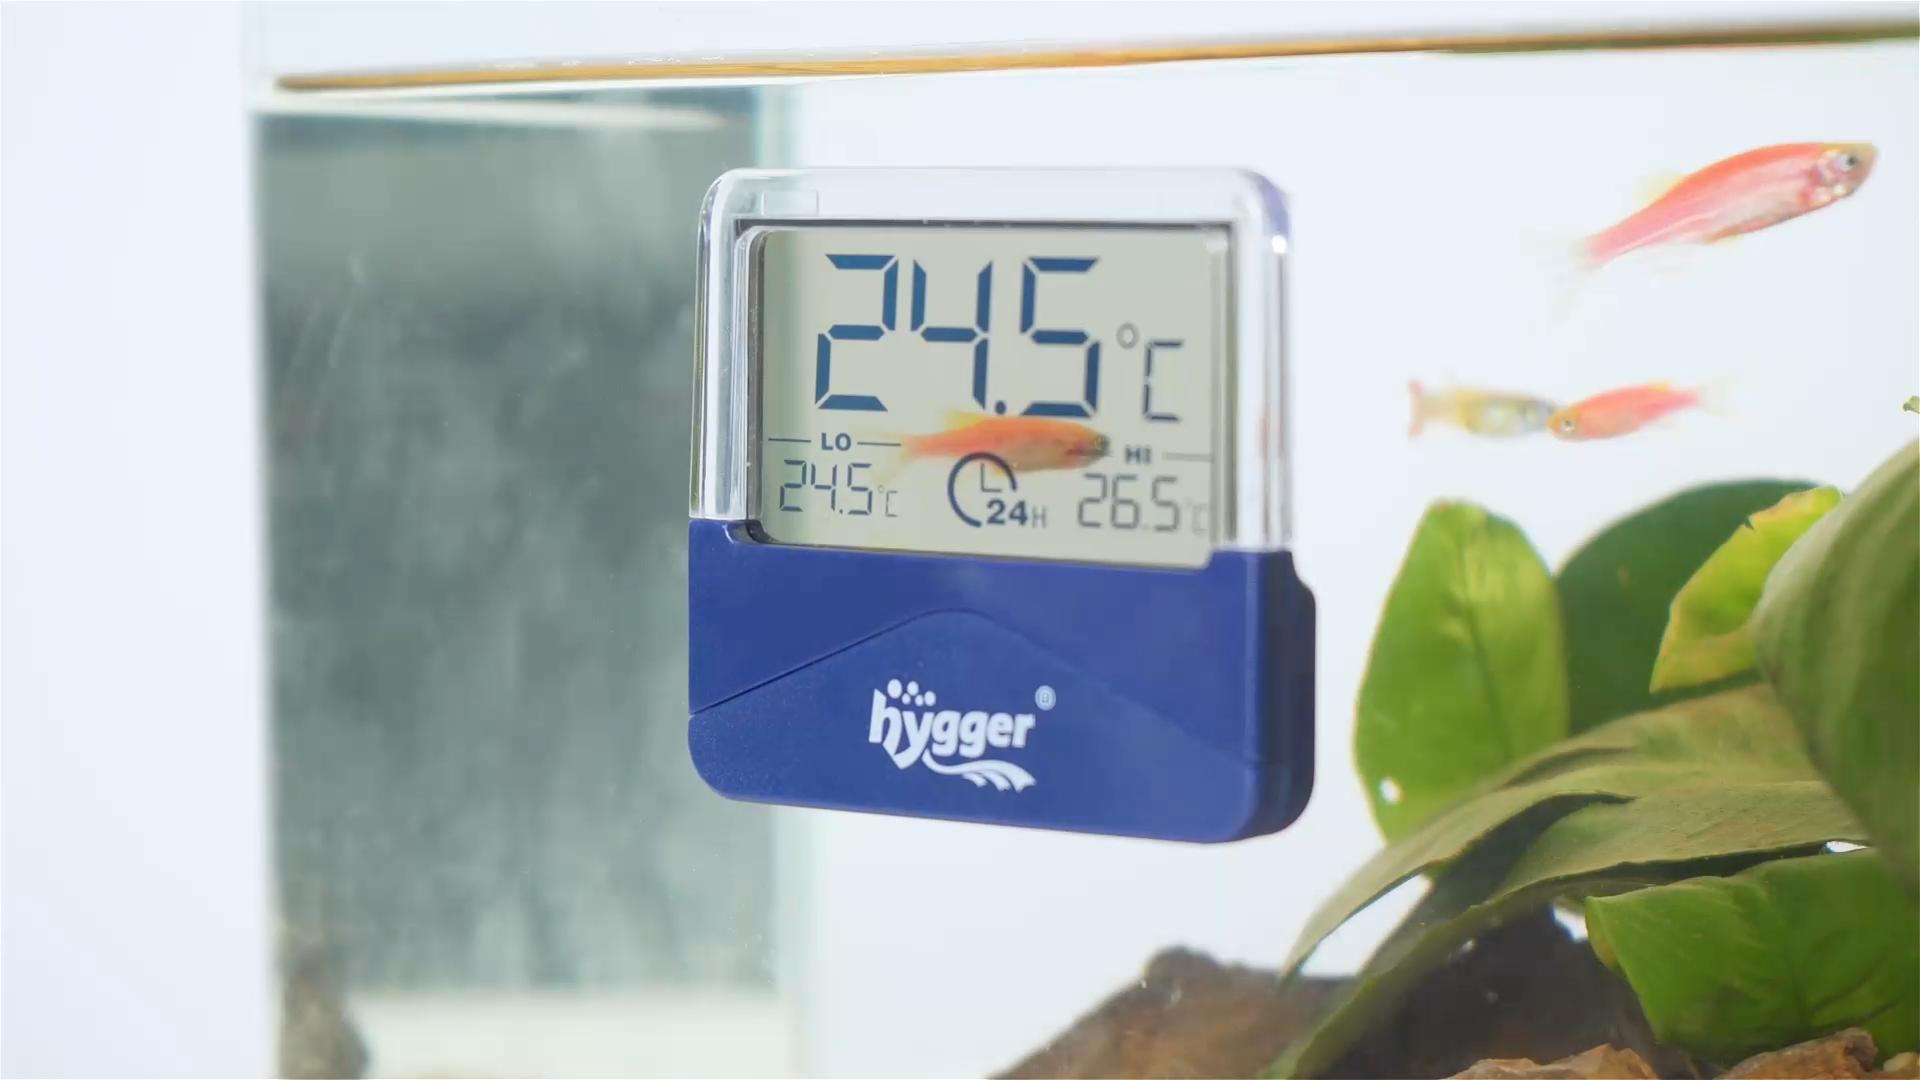 HDE LCD Digital Aquarium Thermometer 